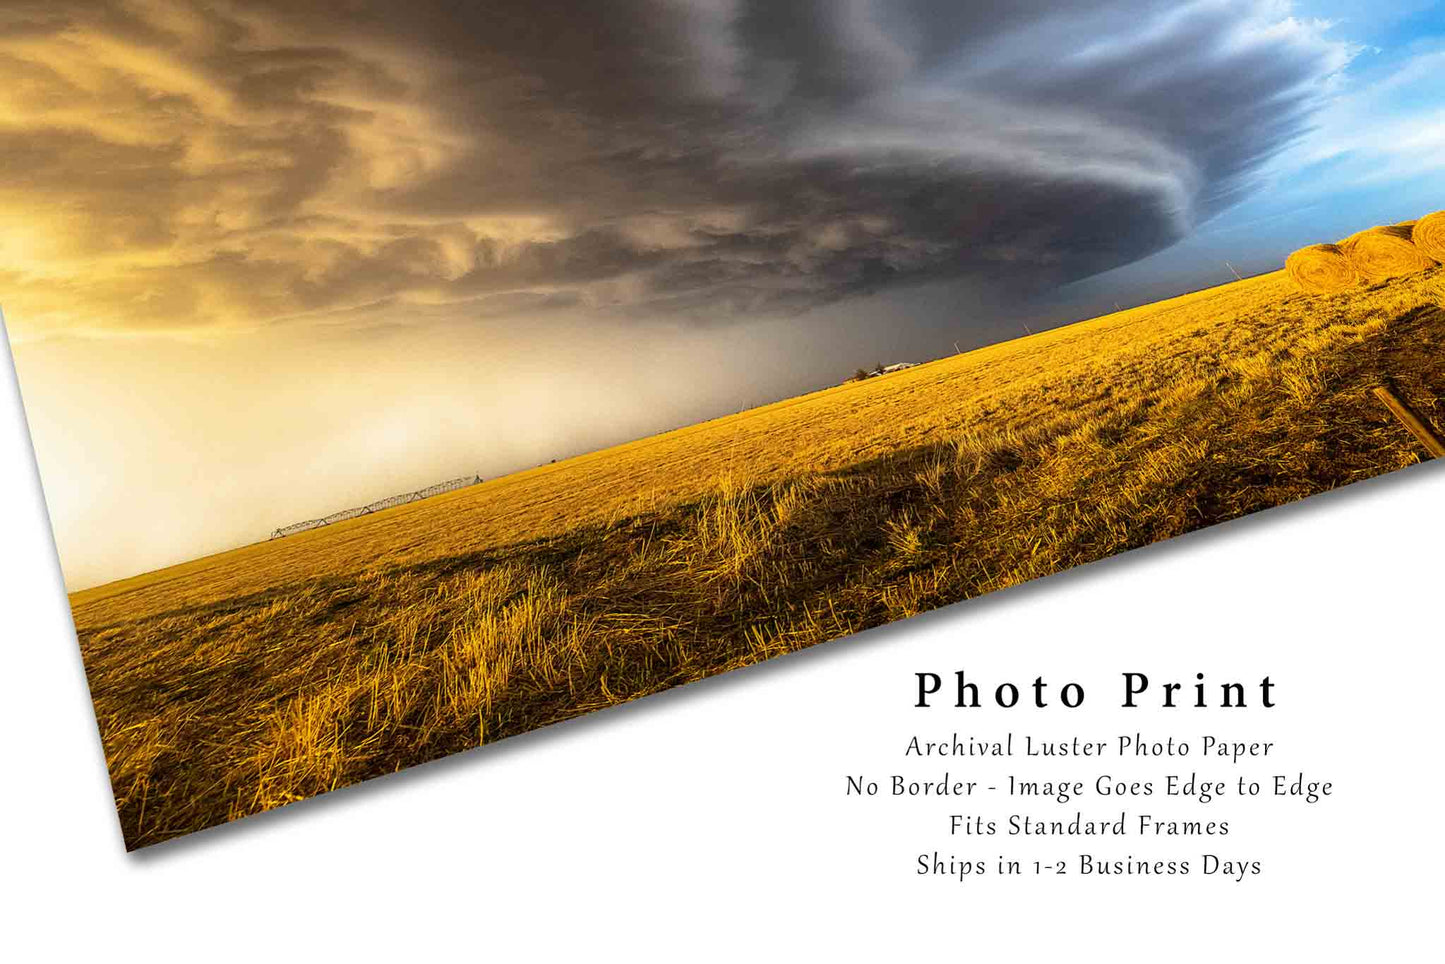 Great Plains Photo Print | Storm Over Farm Picture | Oklahoma Wall Art | Landscape Photography | Thunderstorm Decor